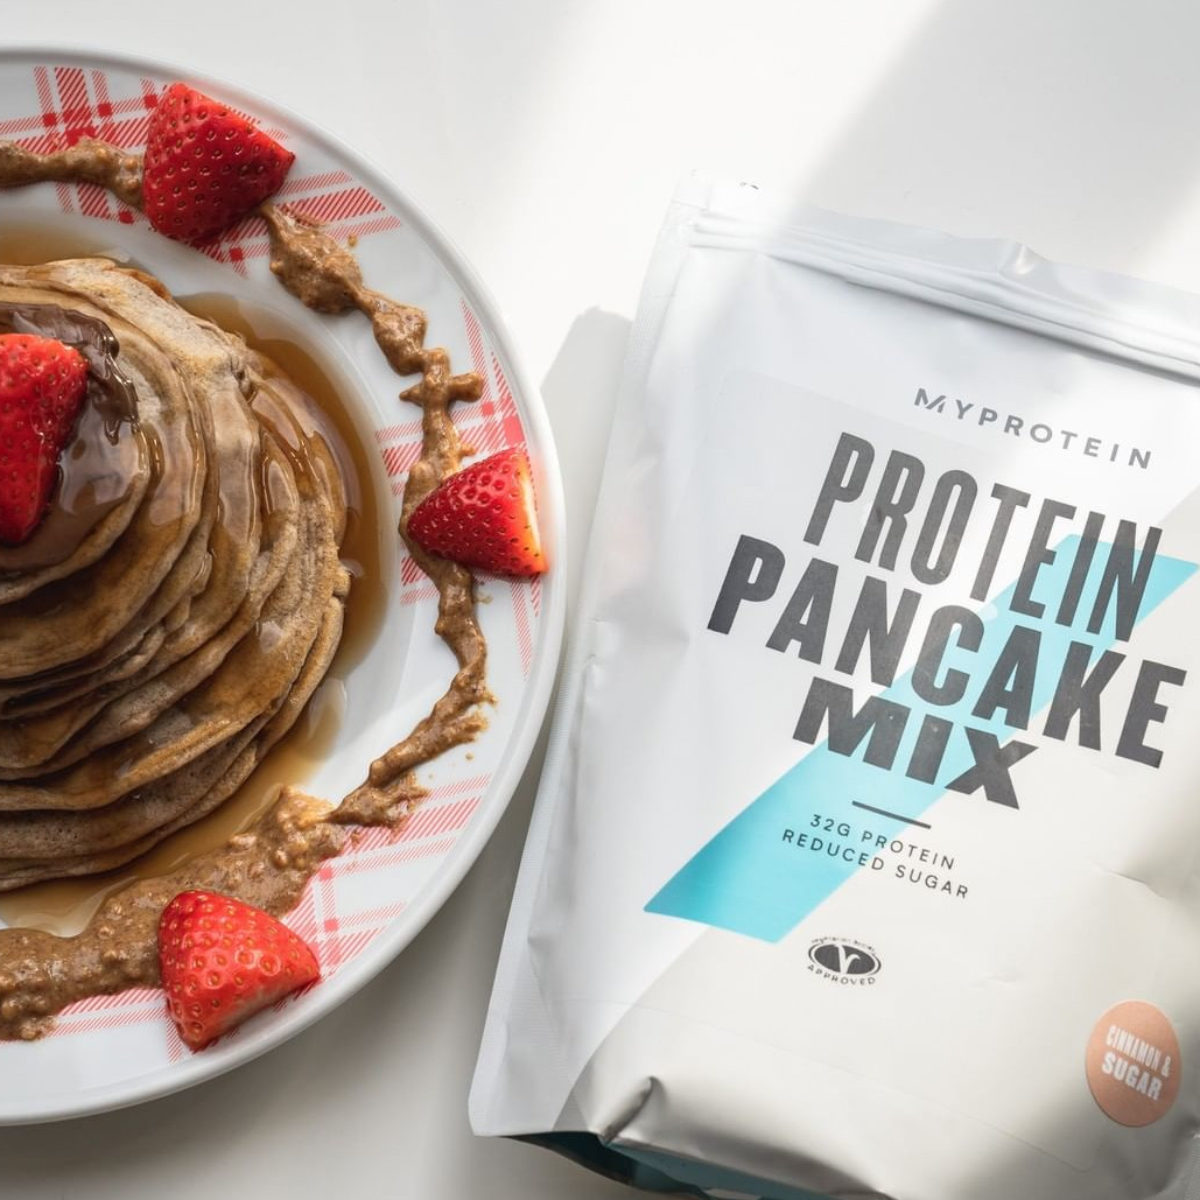 Jabeth Wilson tildeling klassisk Myprotein Protein Pancake Mix Starts Your Day Off Right!